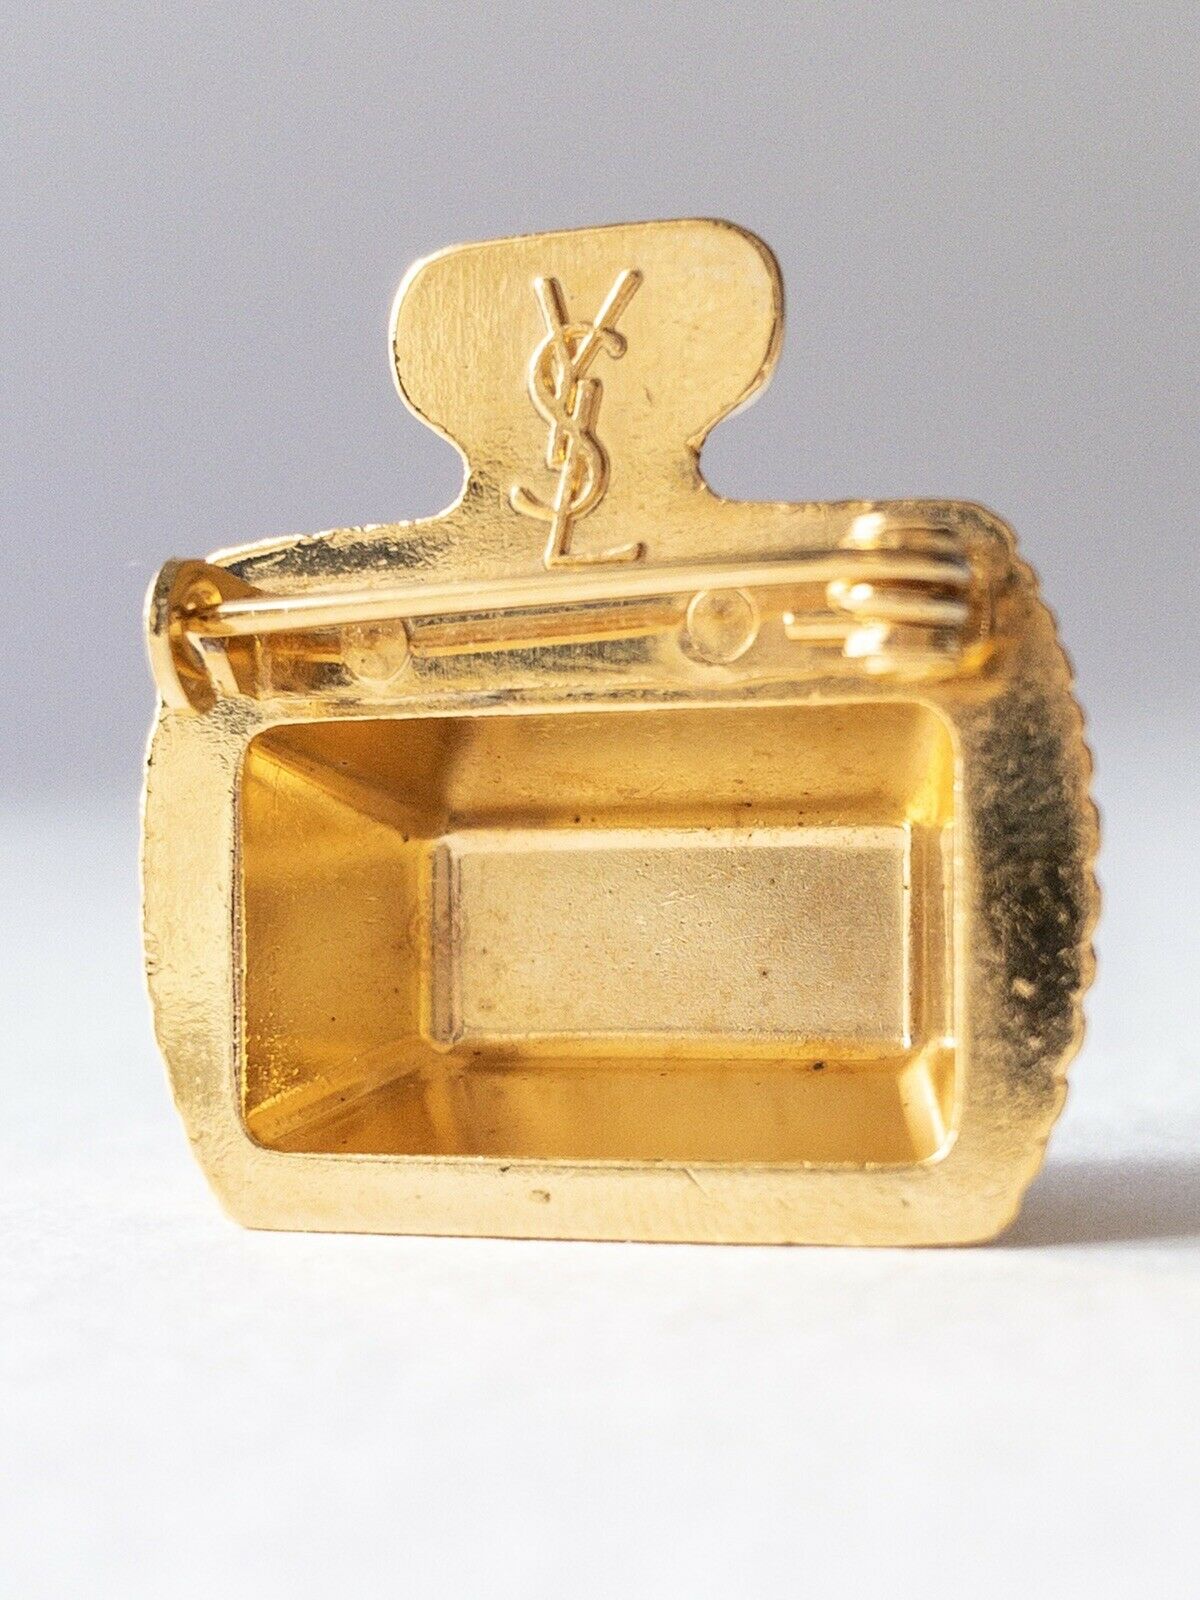 YSL Yves Saint Laurent Perfume Bottle Gold Tone Brooch Pin Vintage